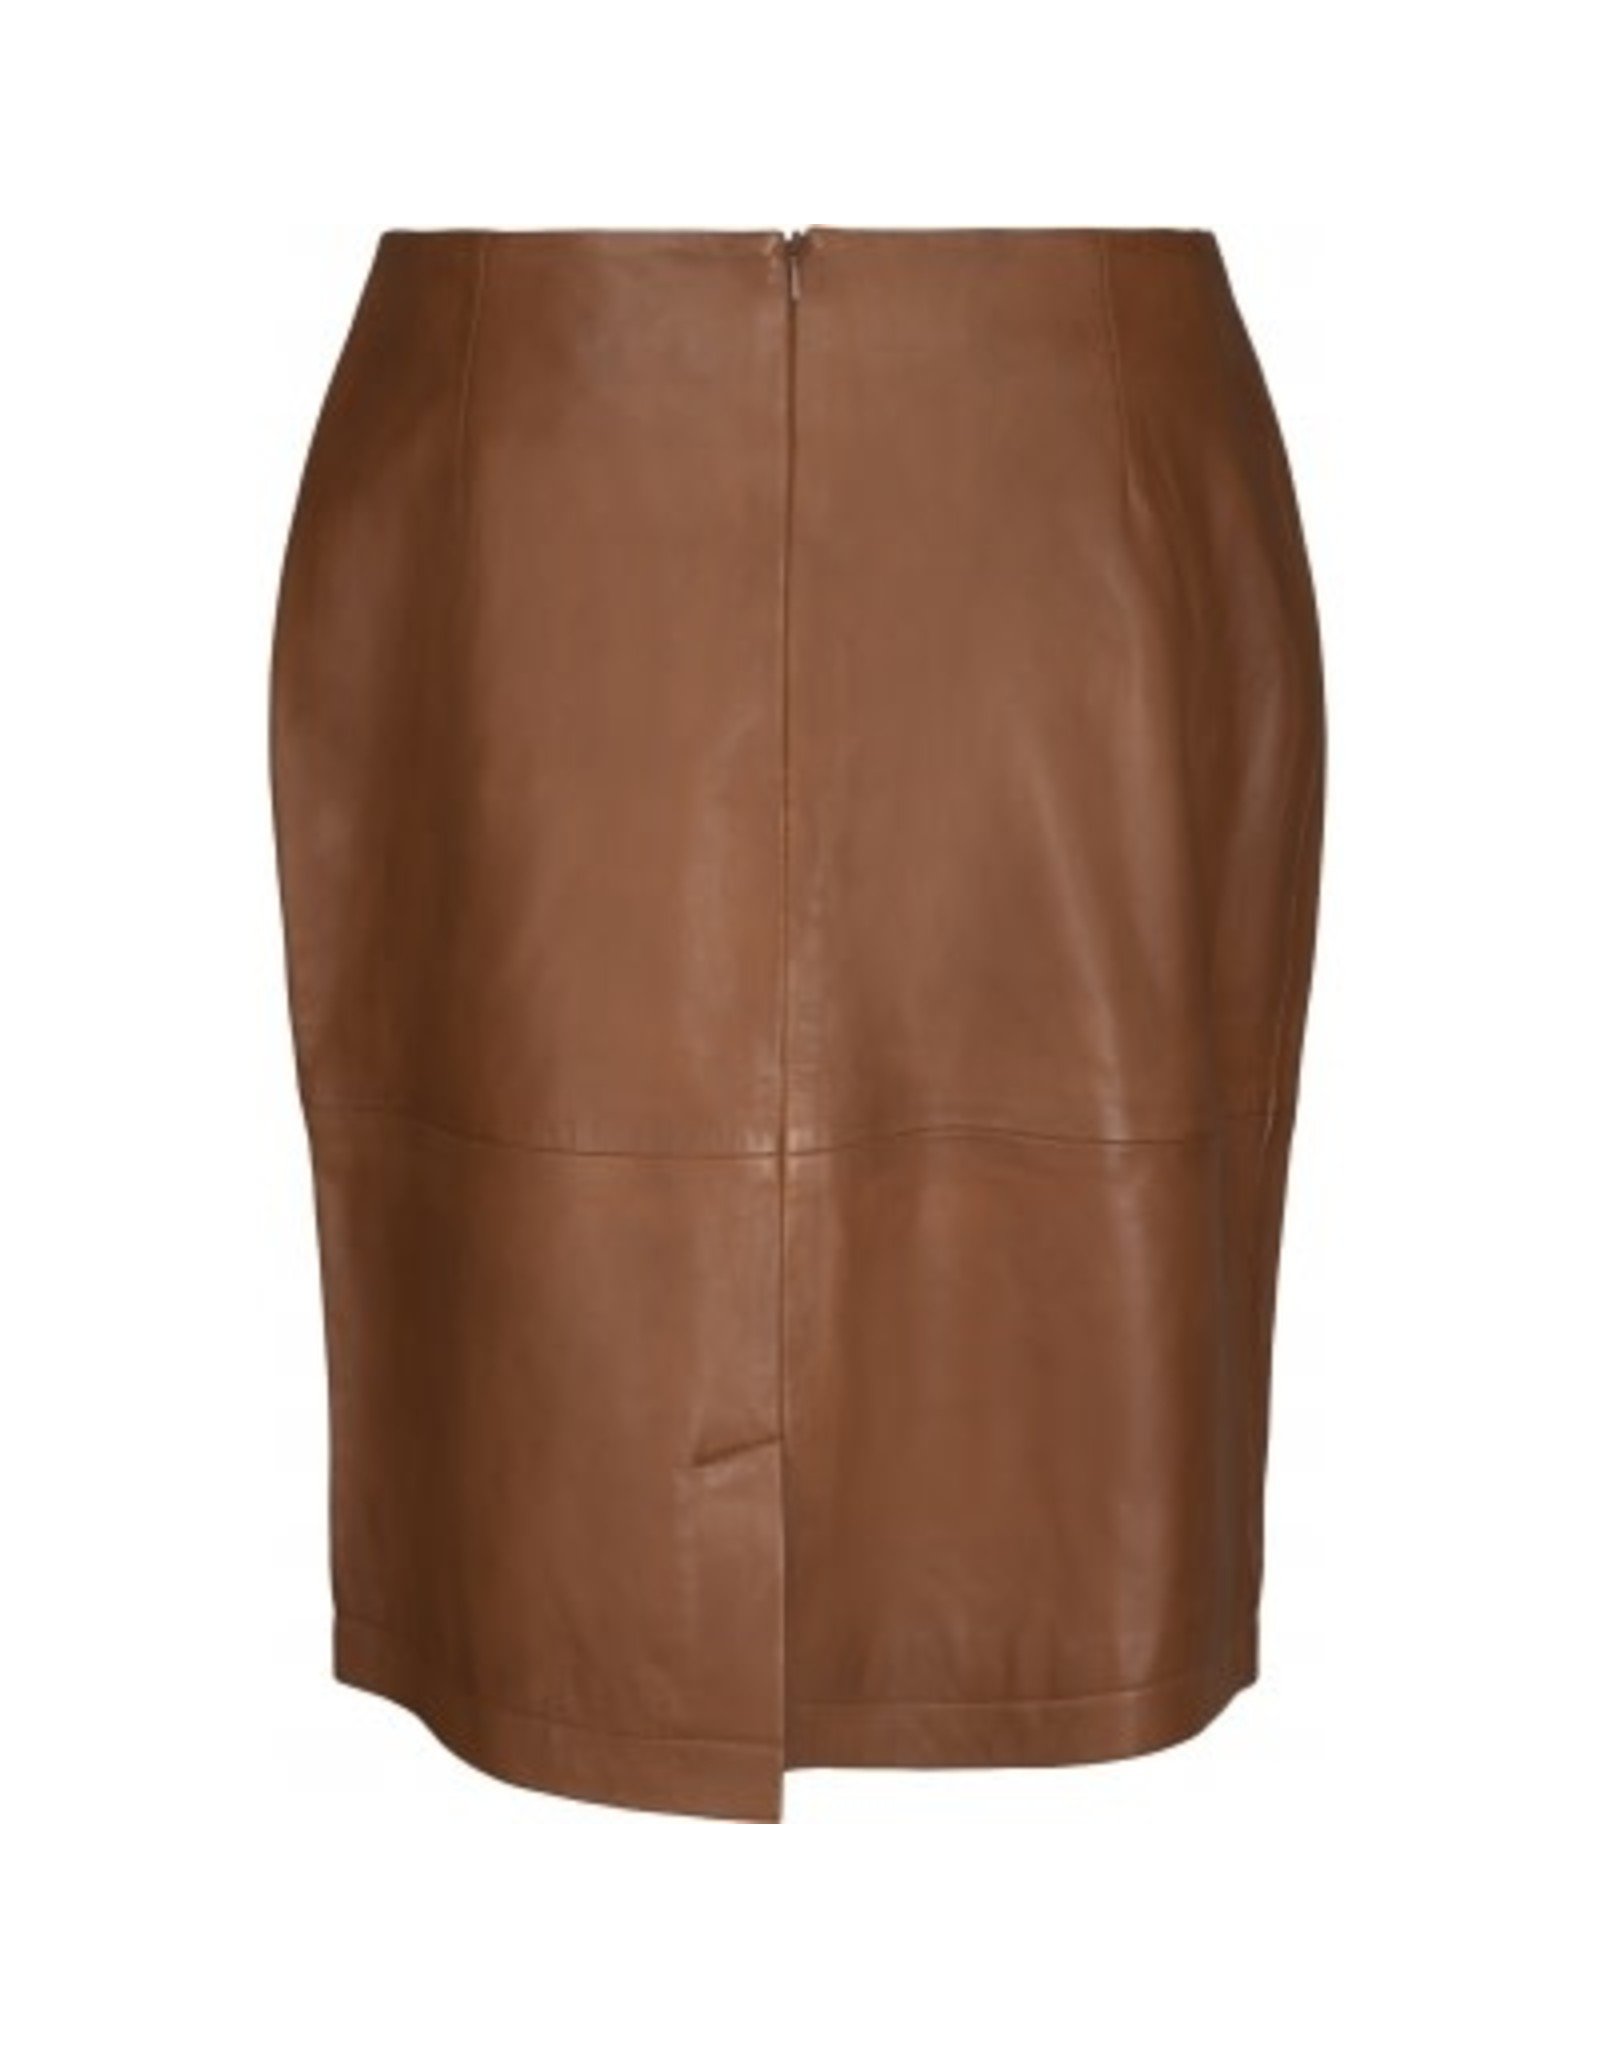 Minus Dellie Leather Skirt